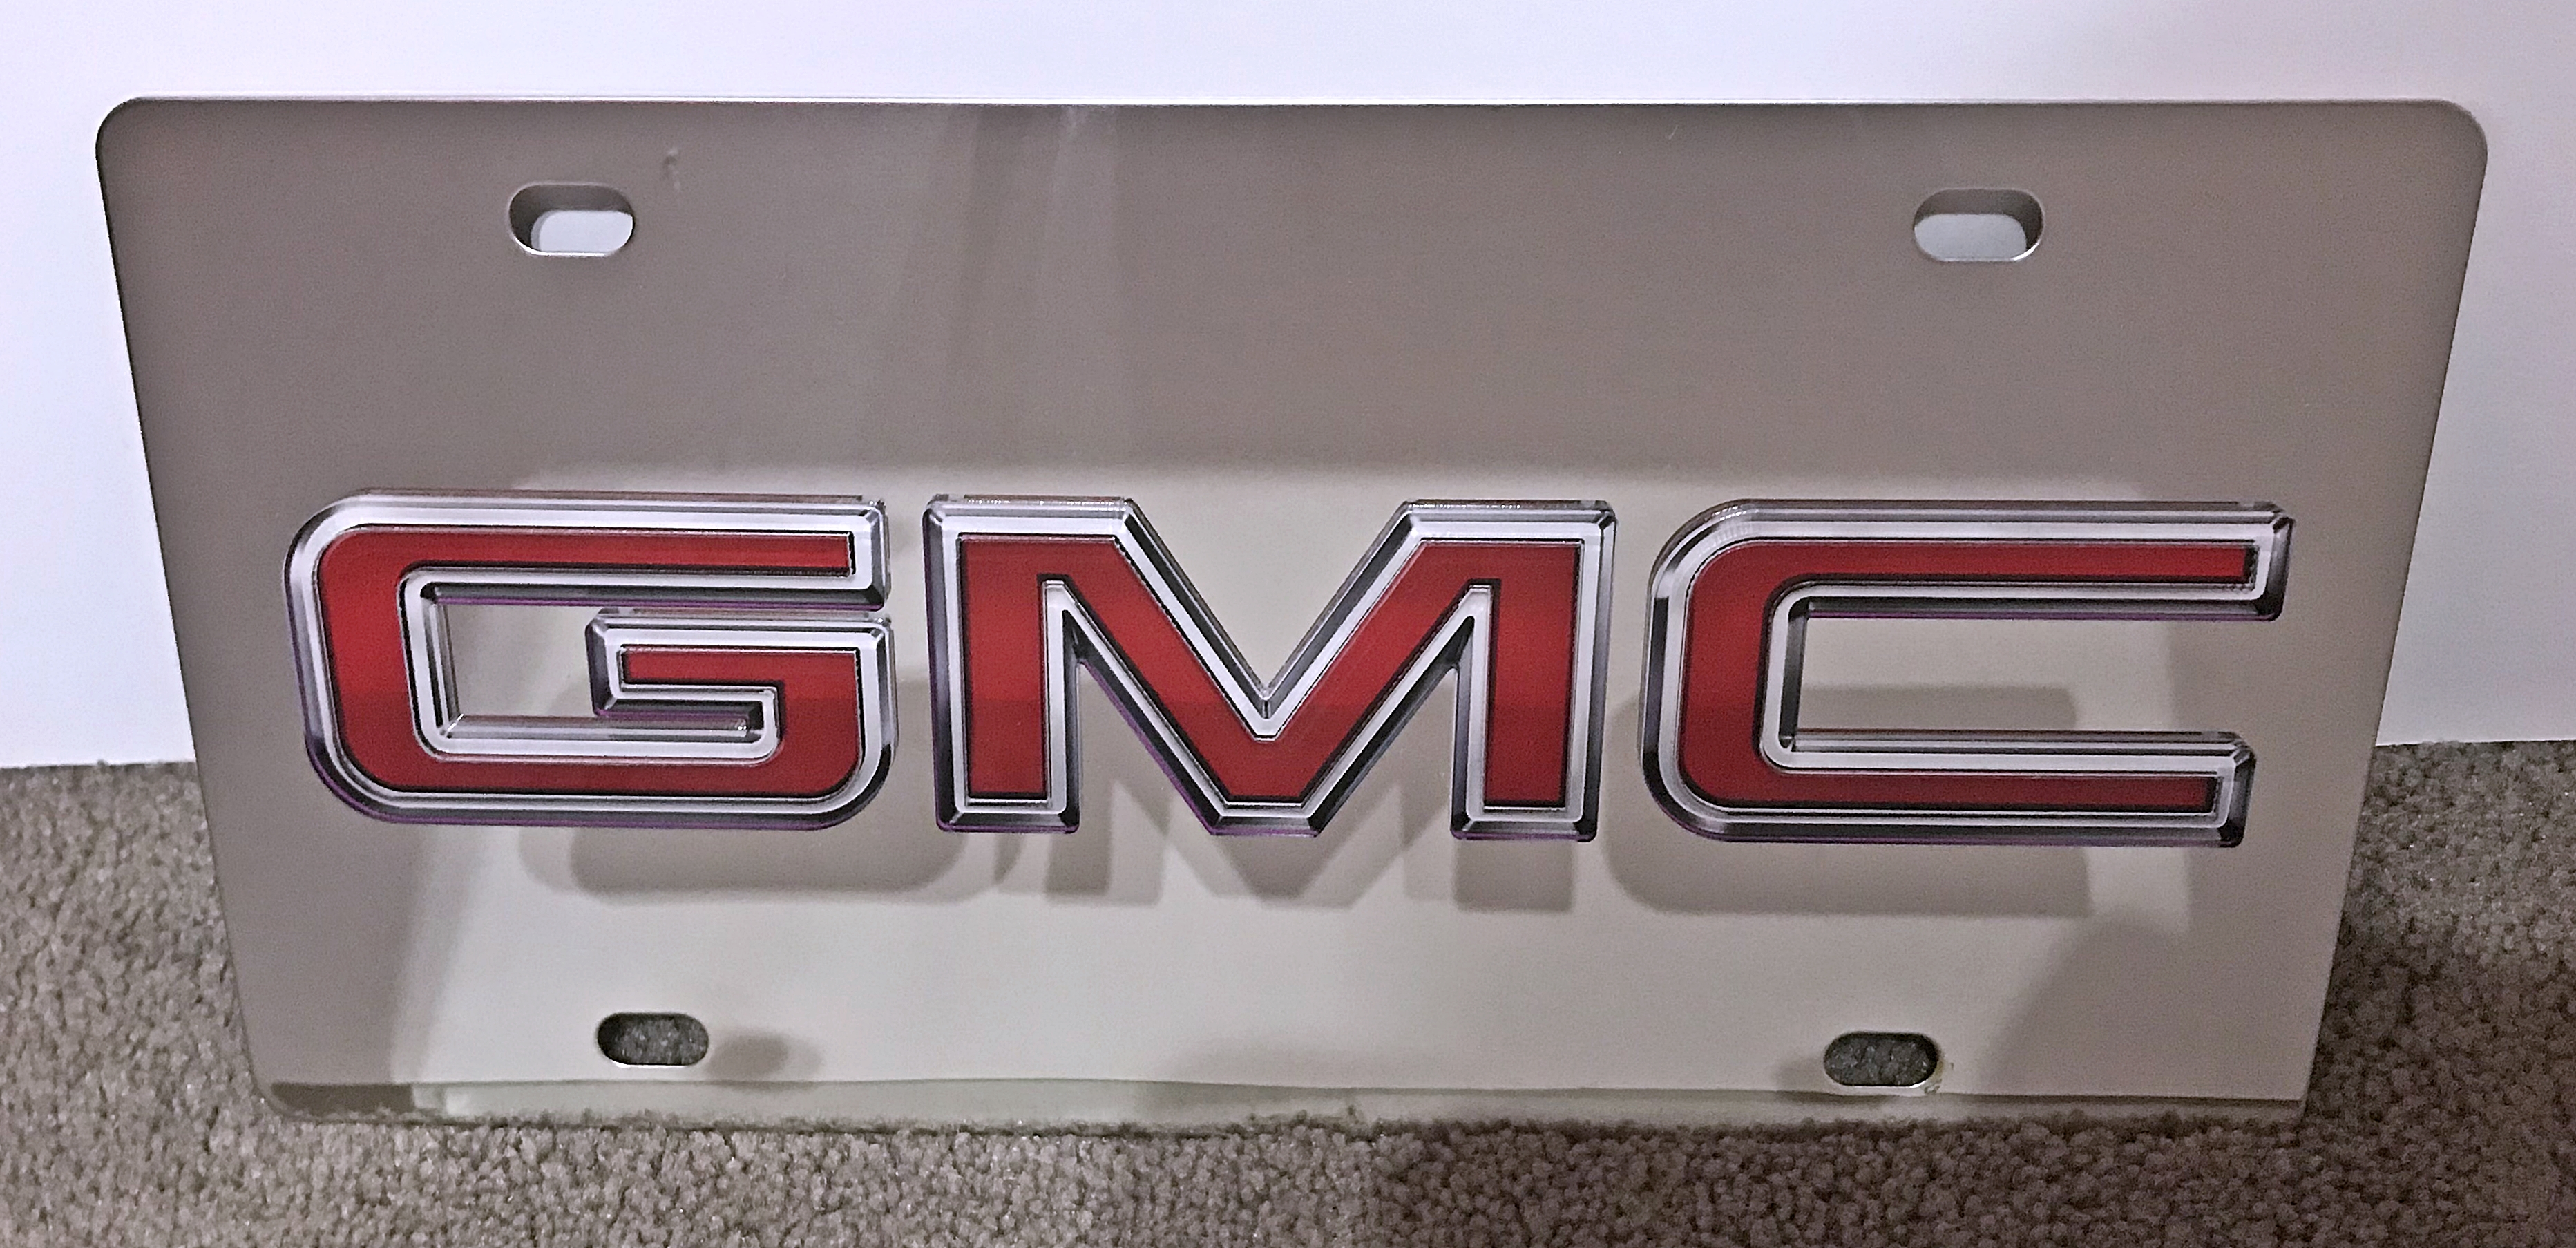 GMC stainless steel vanity license plate tag